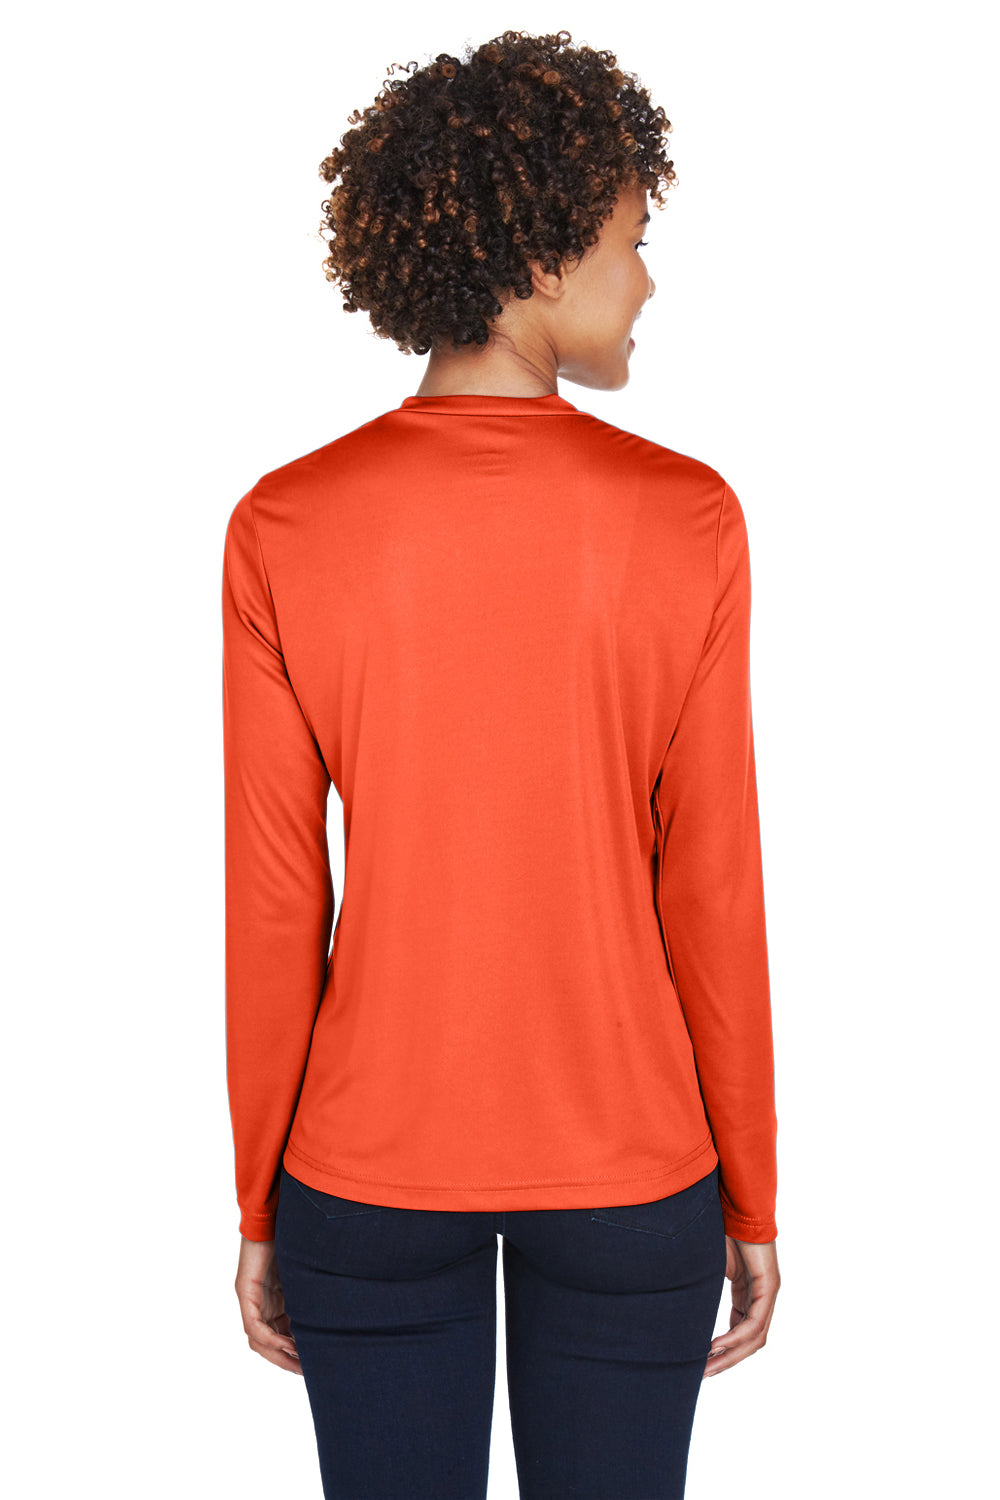 Team 365 TT11WL Womens Zone Performance Moisture Wicking Long Sleeve Crewneck T-Shirt Orange Back